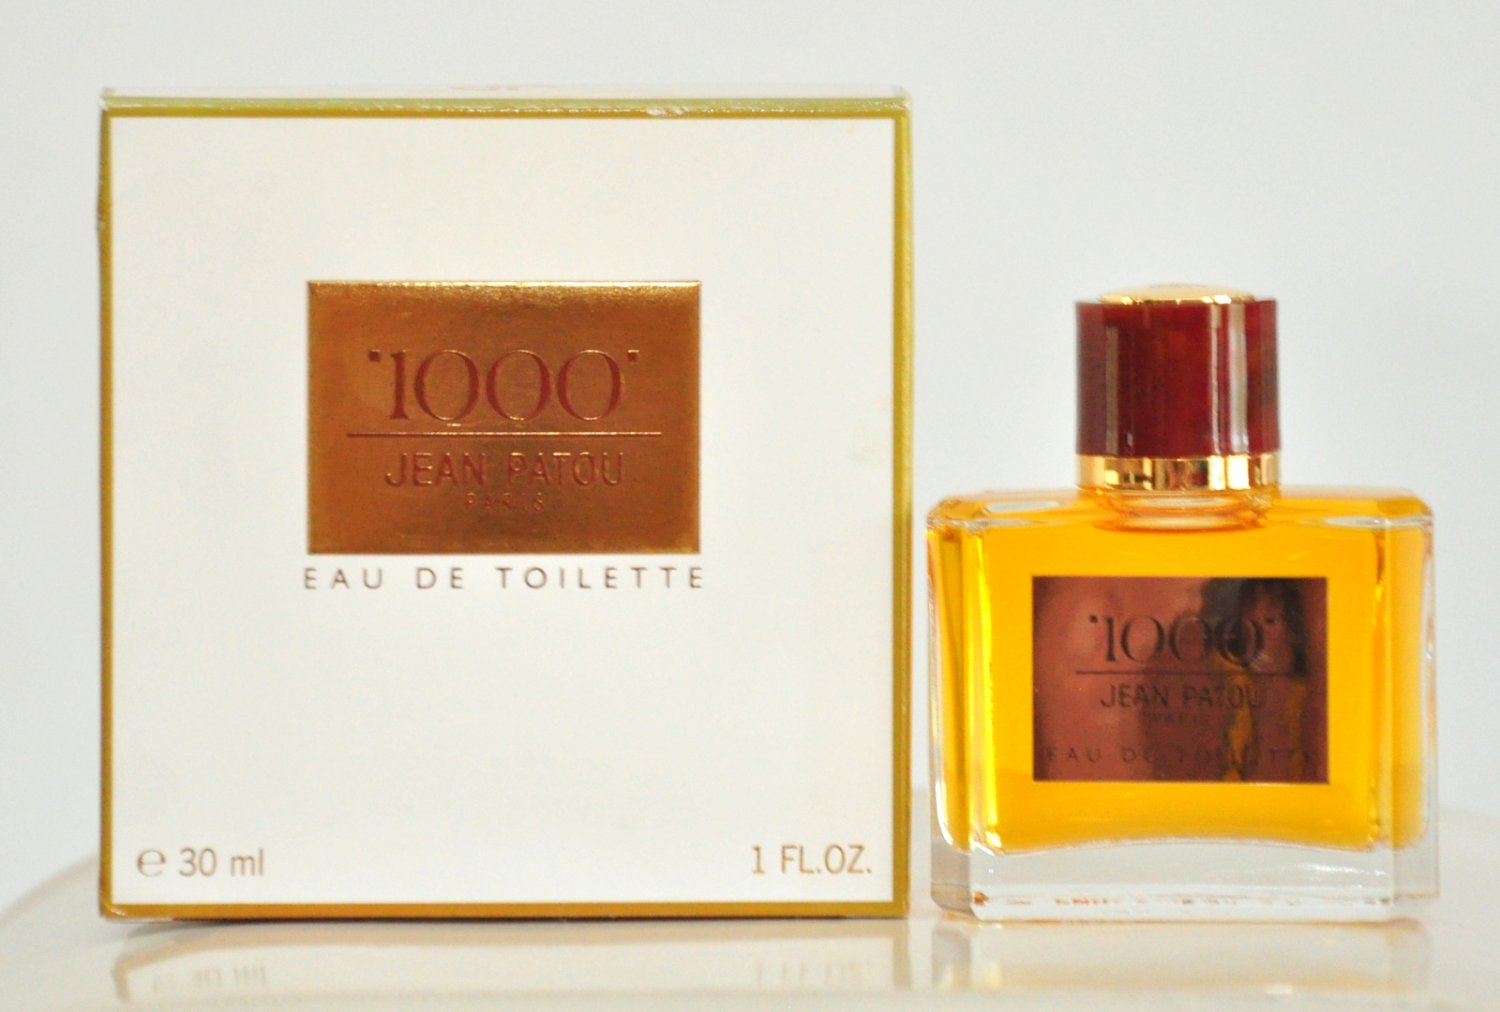 Jean Patou 1000 Eau de Toilette for woman Edt 30Ml 1 Fl. Oz. Perfume ...